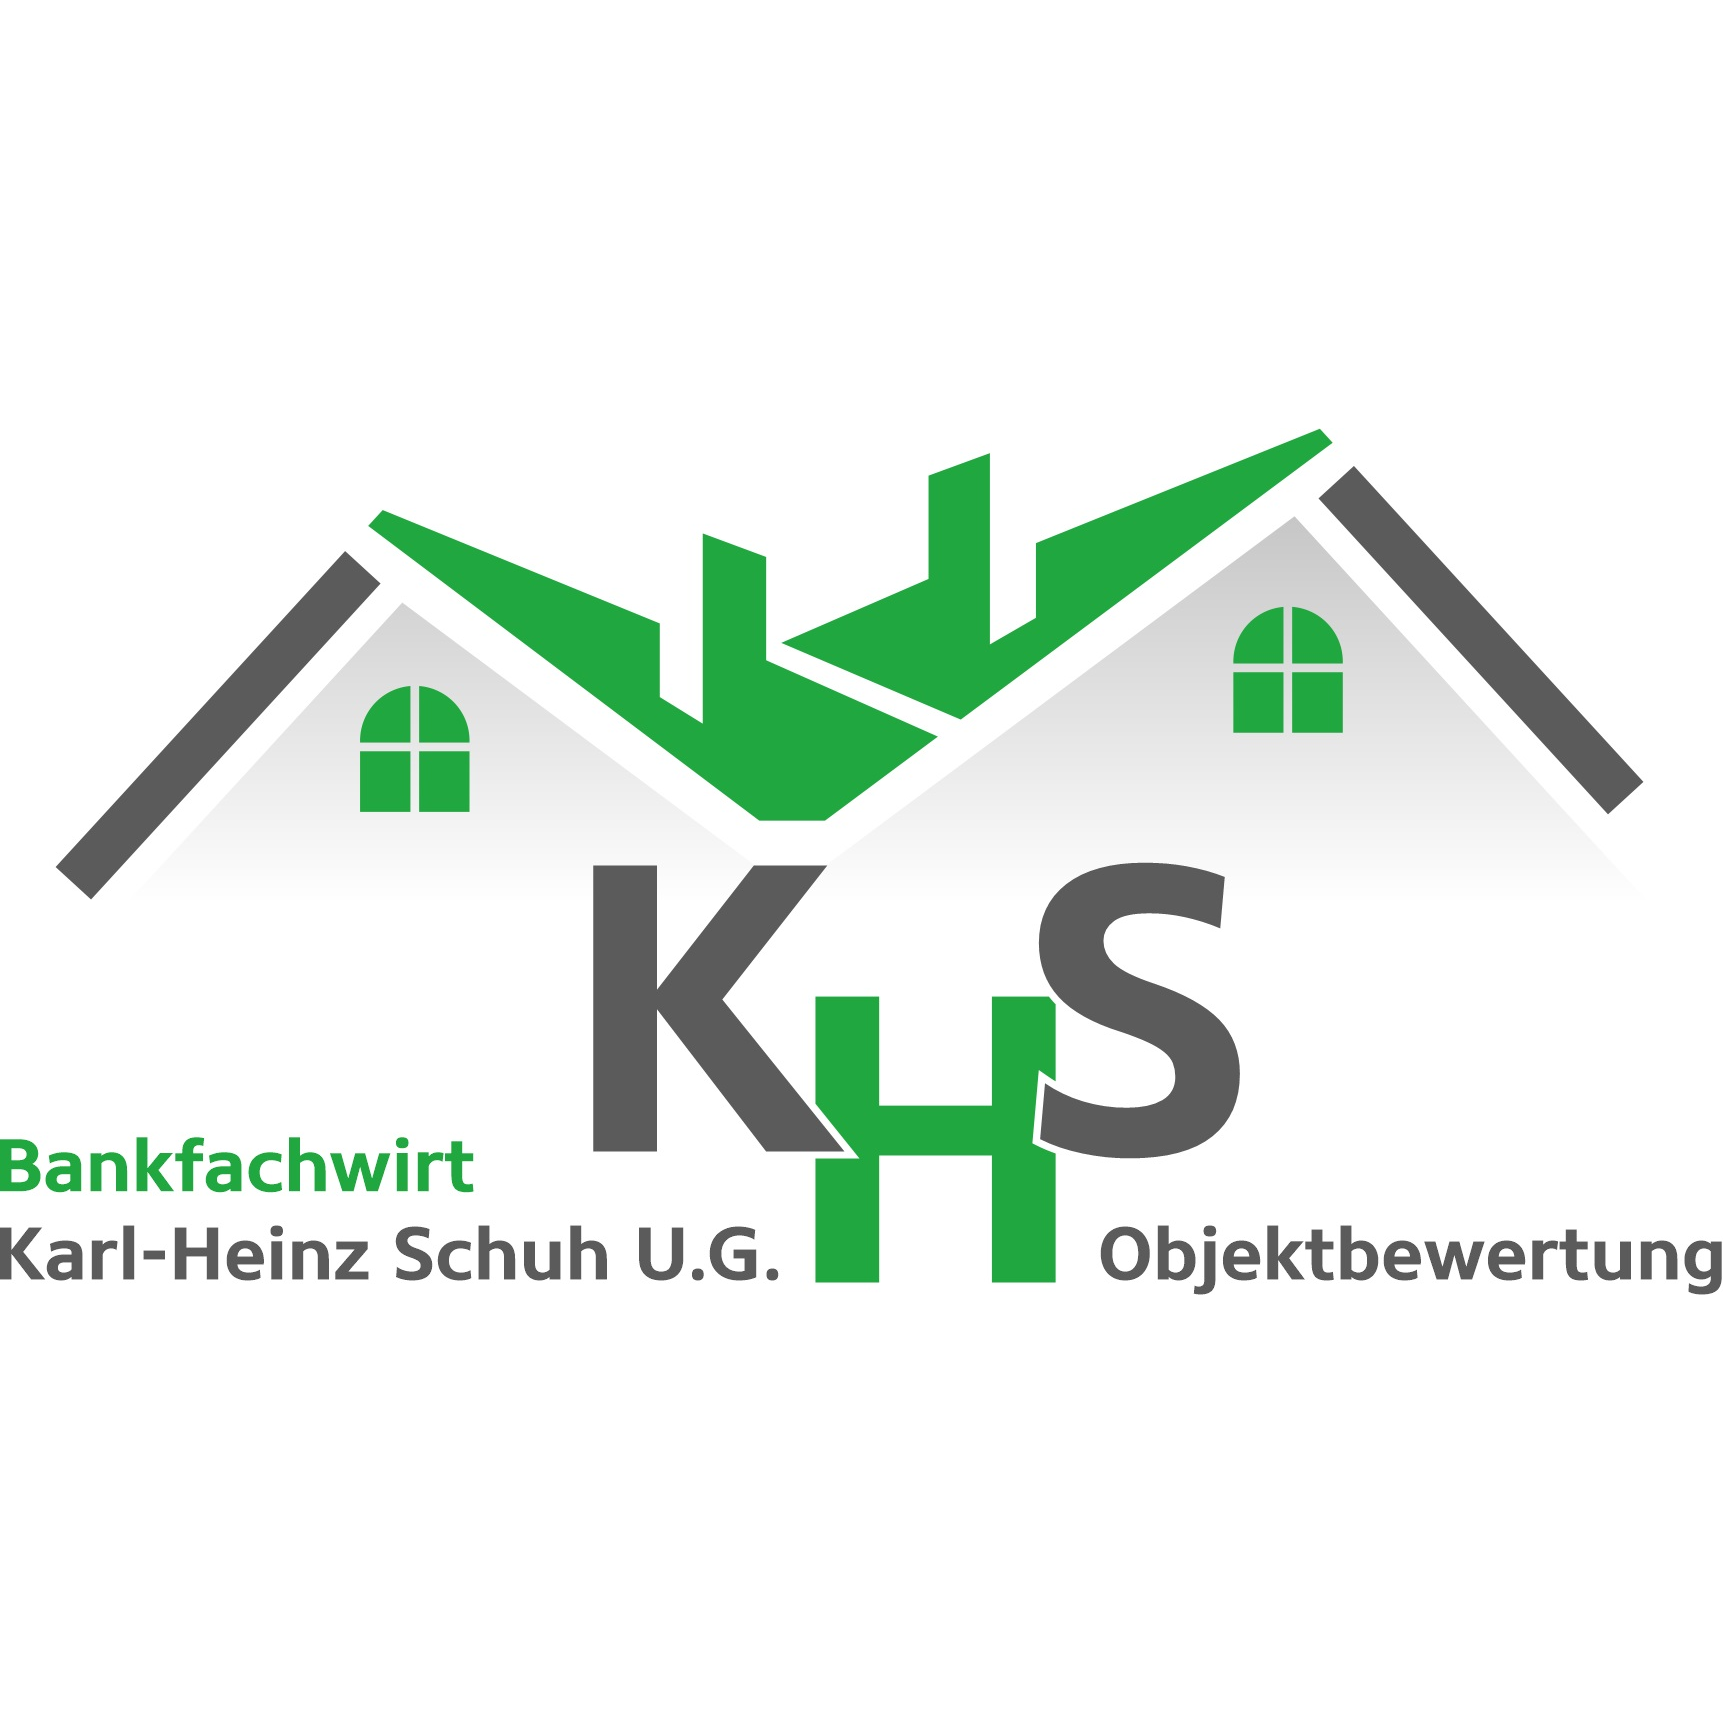 Karl-Heinz Schuh U.G. Logo